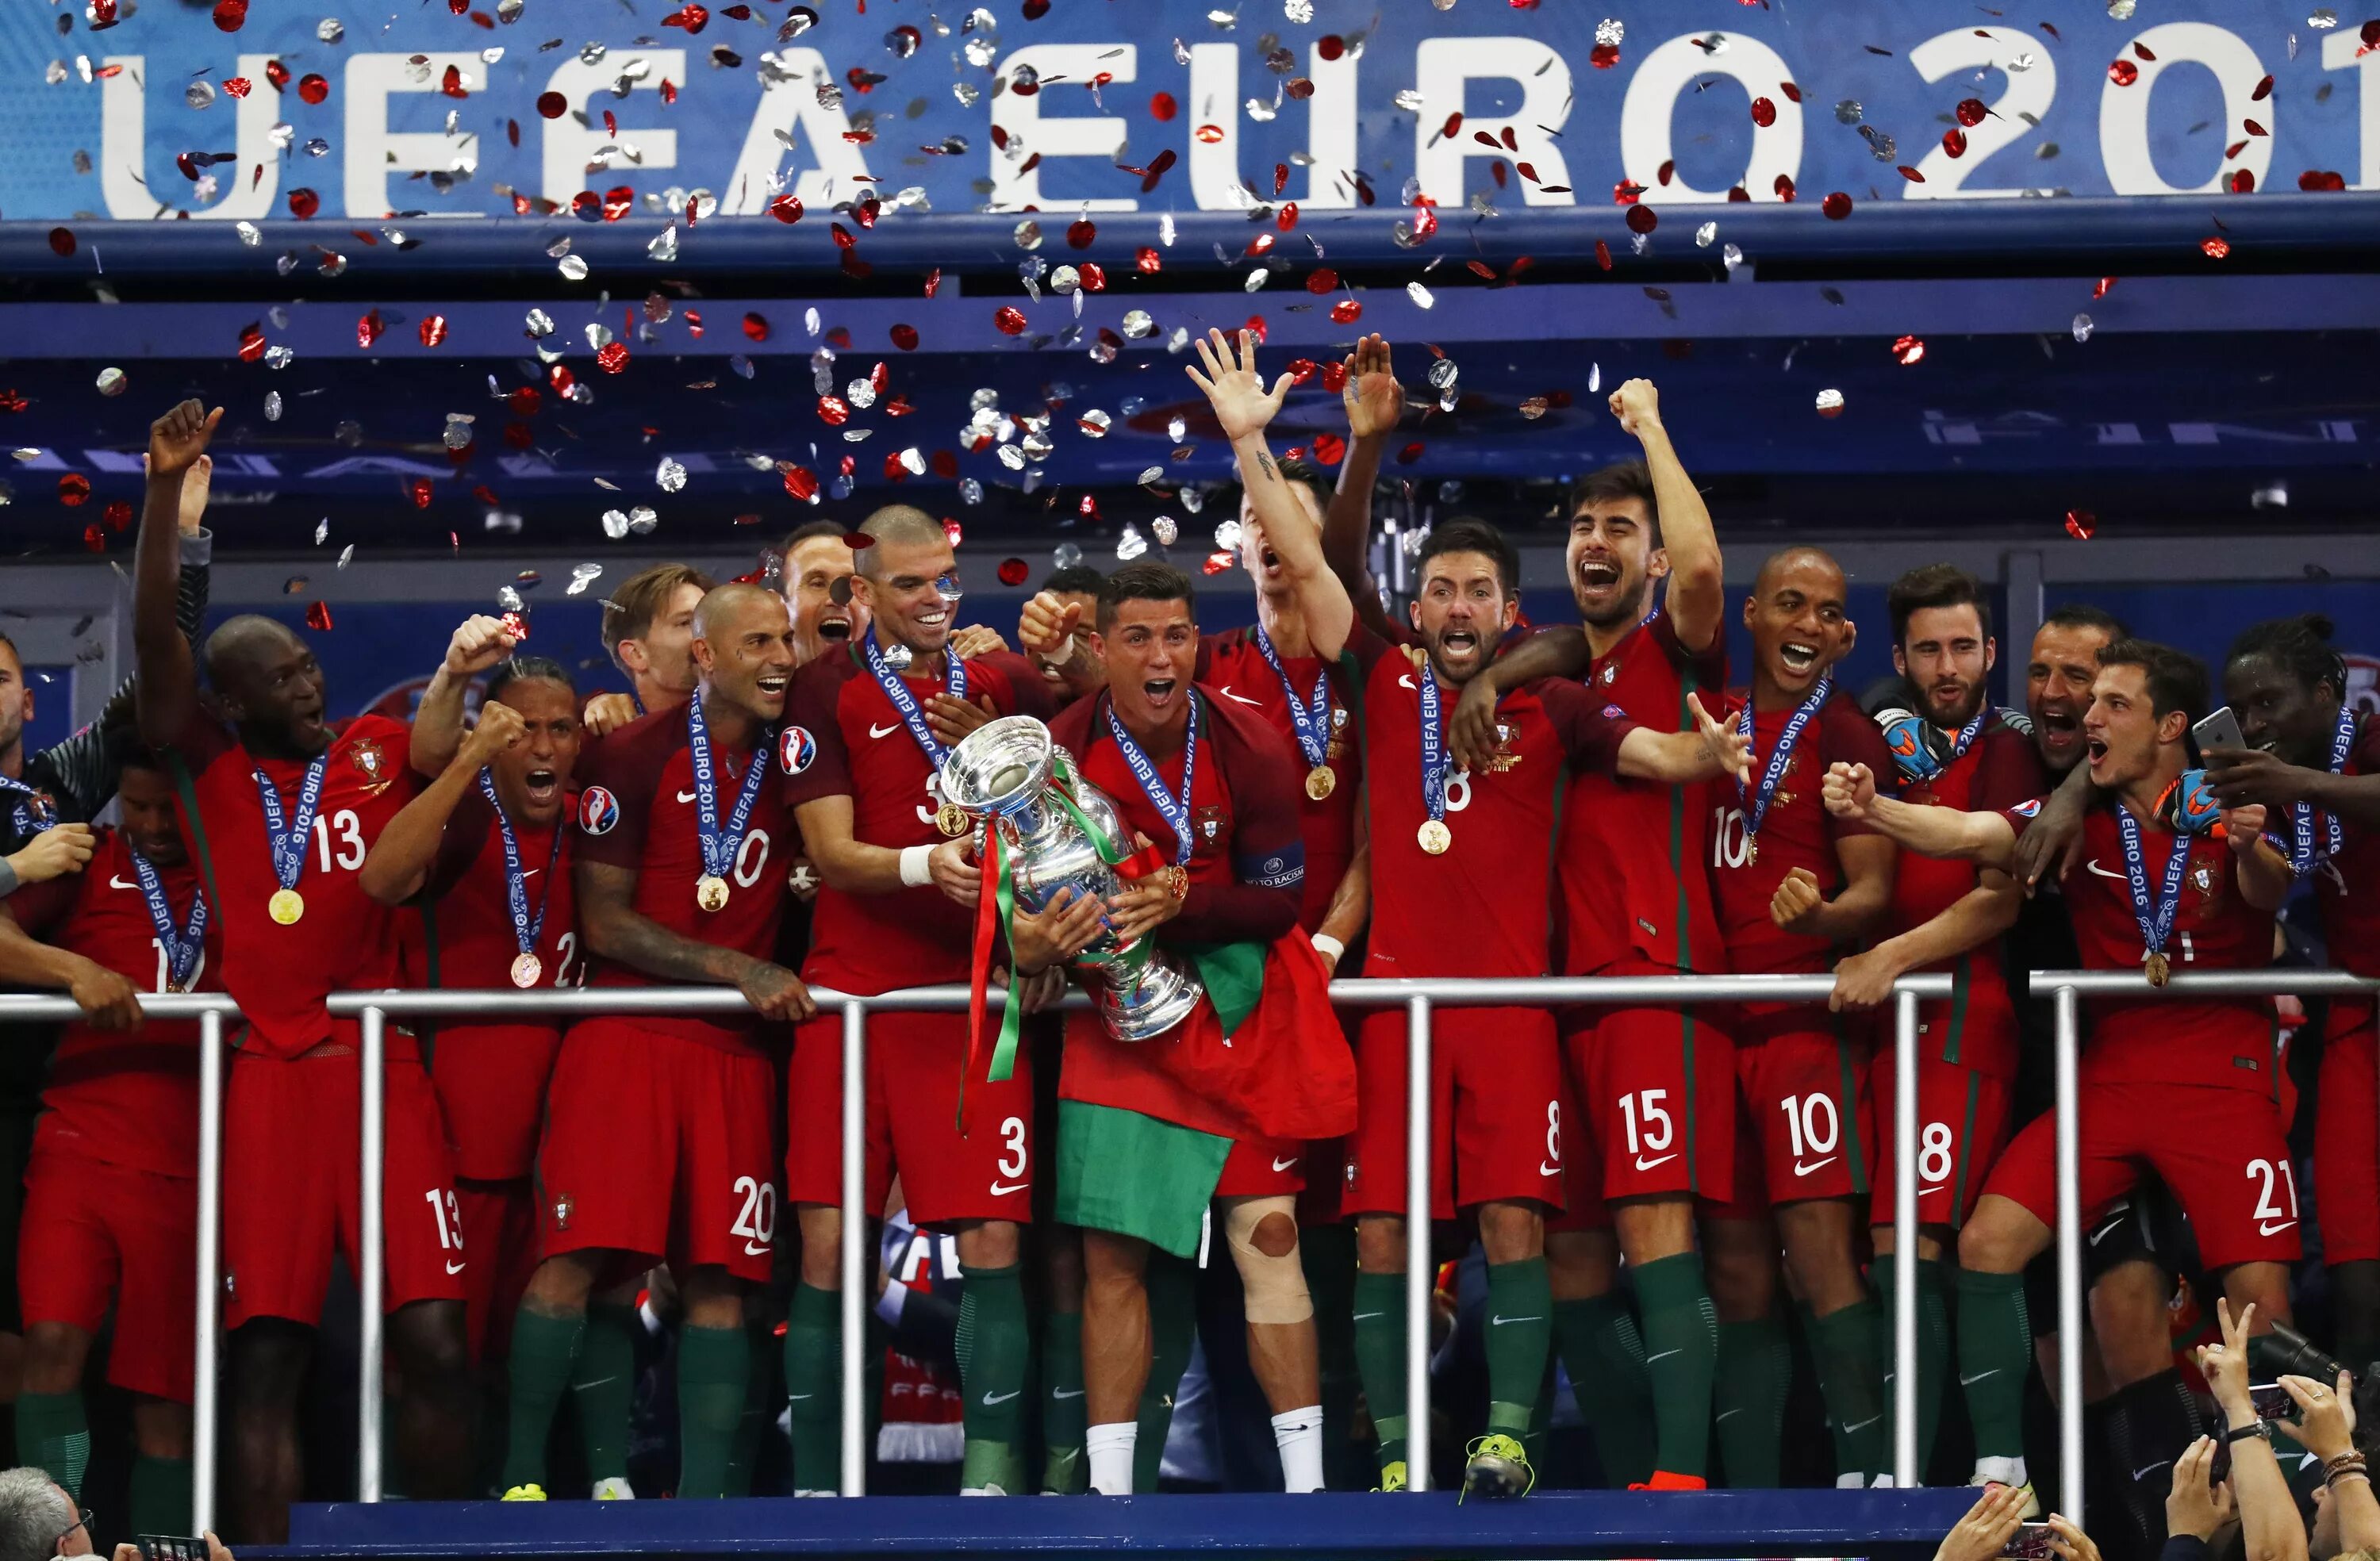 Кубок футбола 2016. Португалия чемпион Европы 2016. Португалия 2016 Чемпионат Европы финал. Португалия Франция финал евро 2016 победа. Португалия выиграла евро 2016.